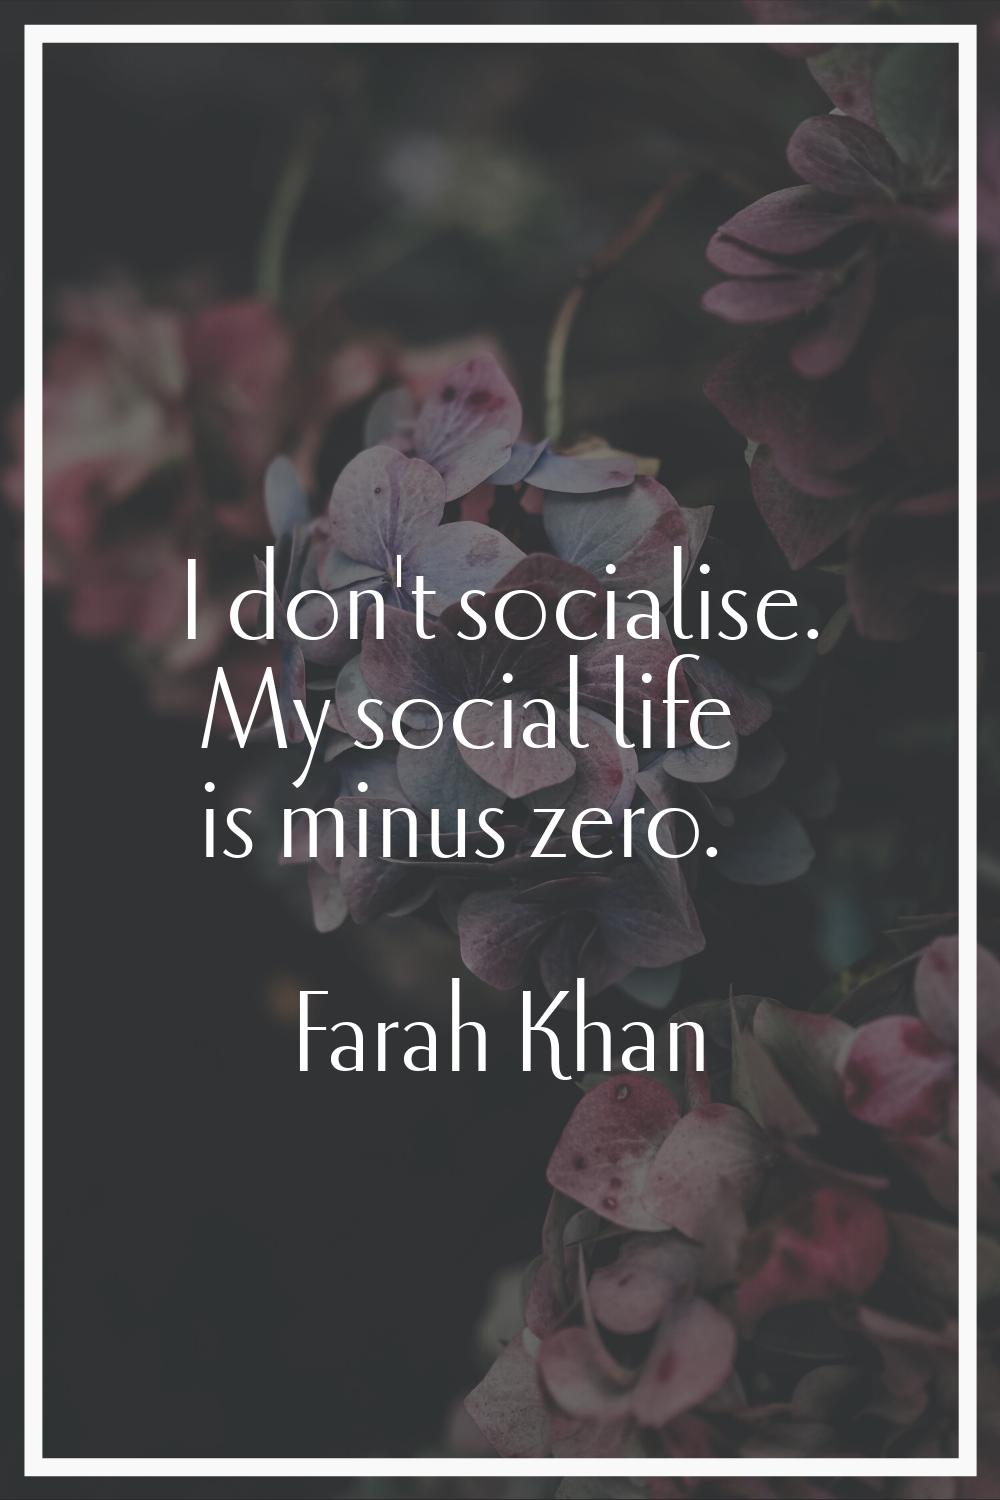 I don't socialise. My social life is minus zero.